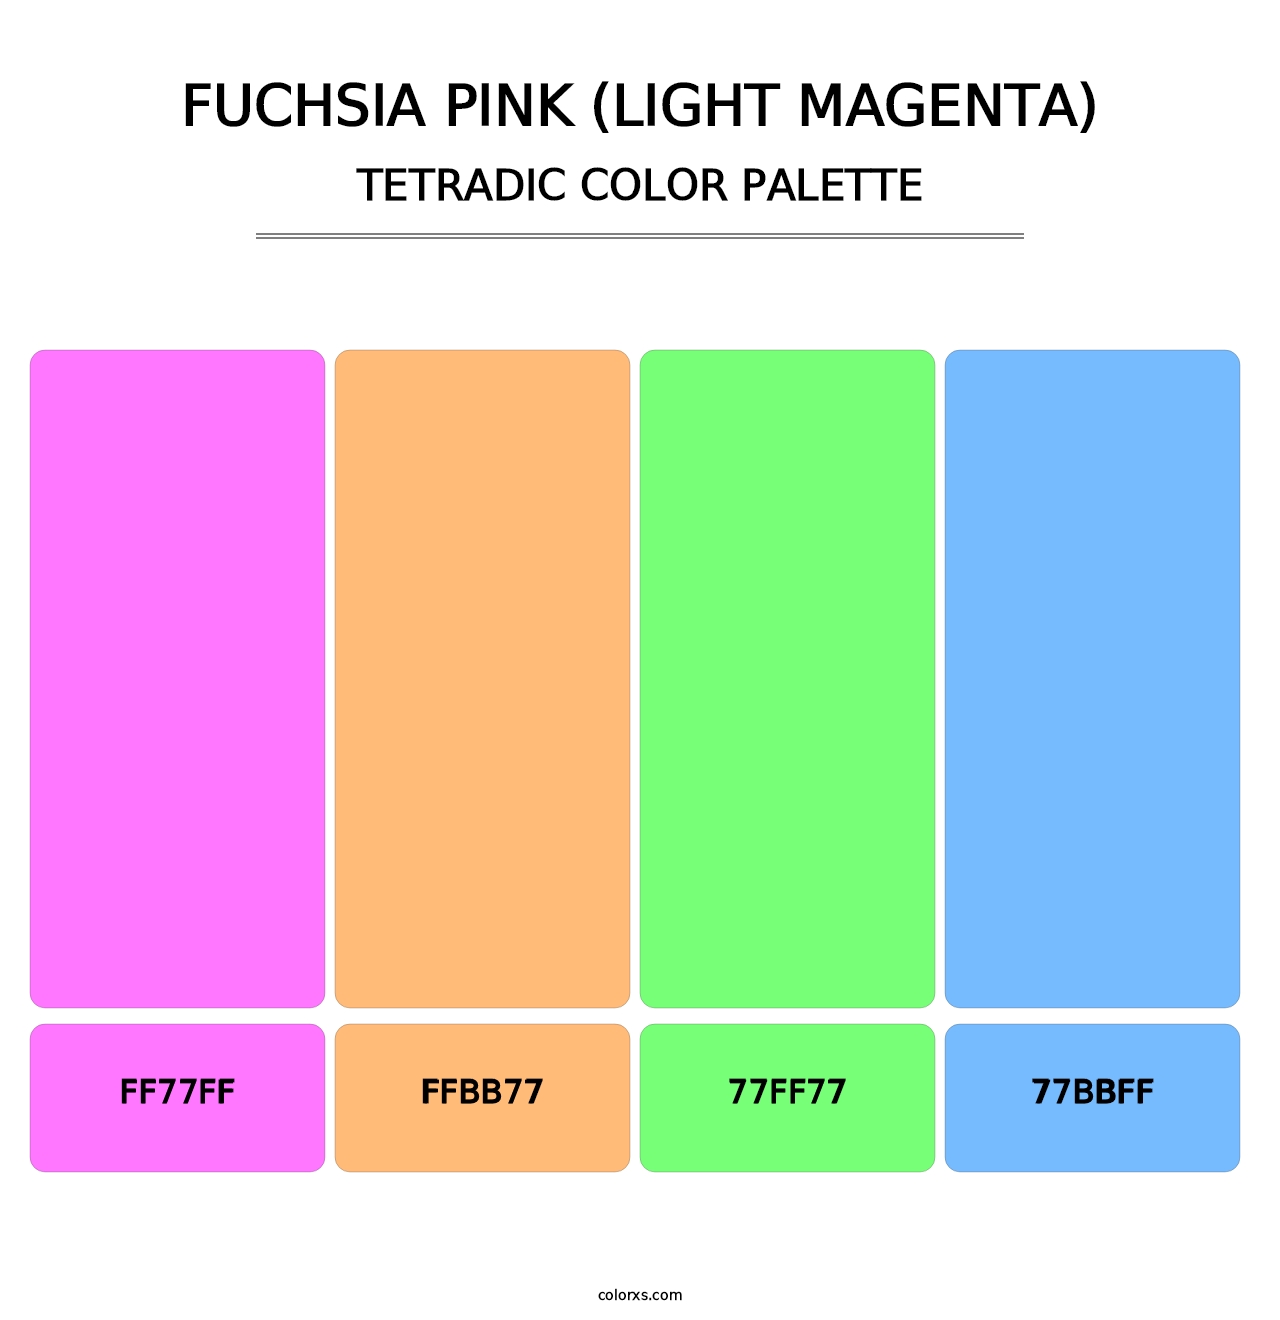 Fuchsia Pink (Light Magenta) - Tetradic Color Palette